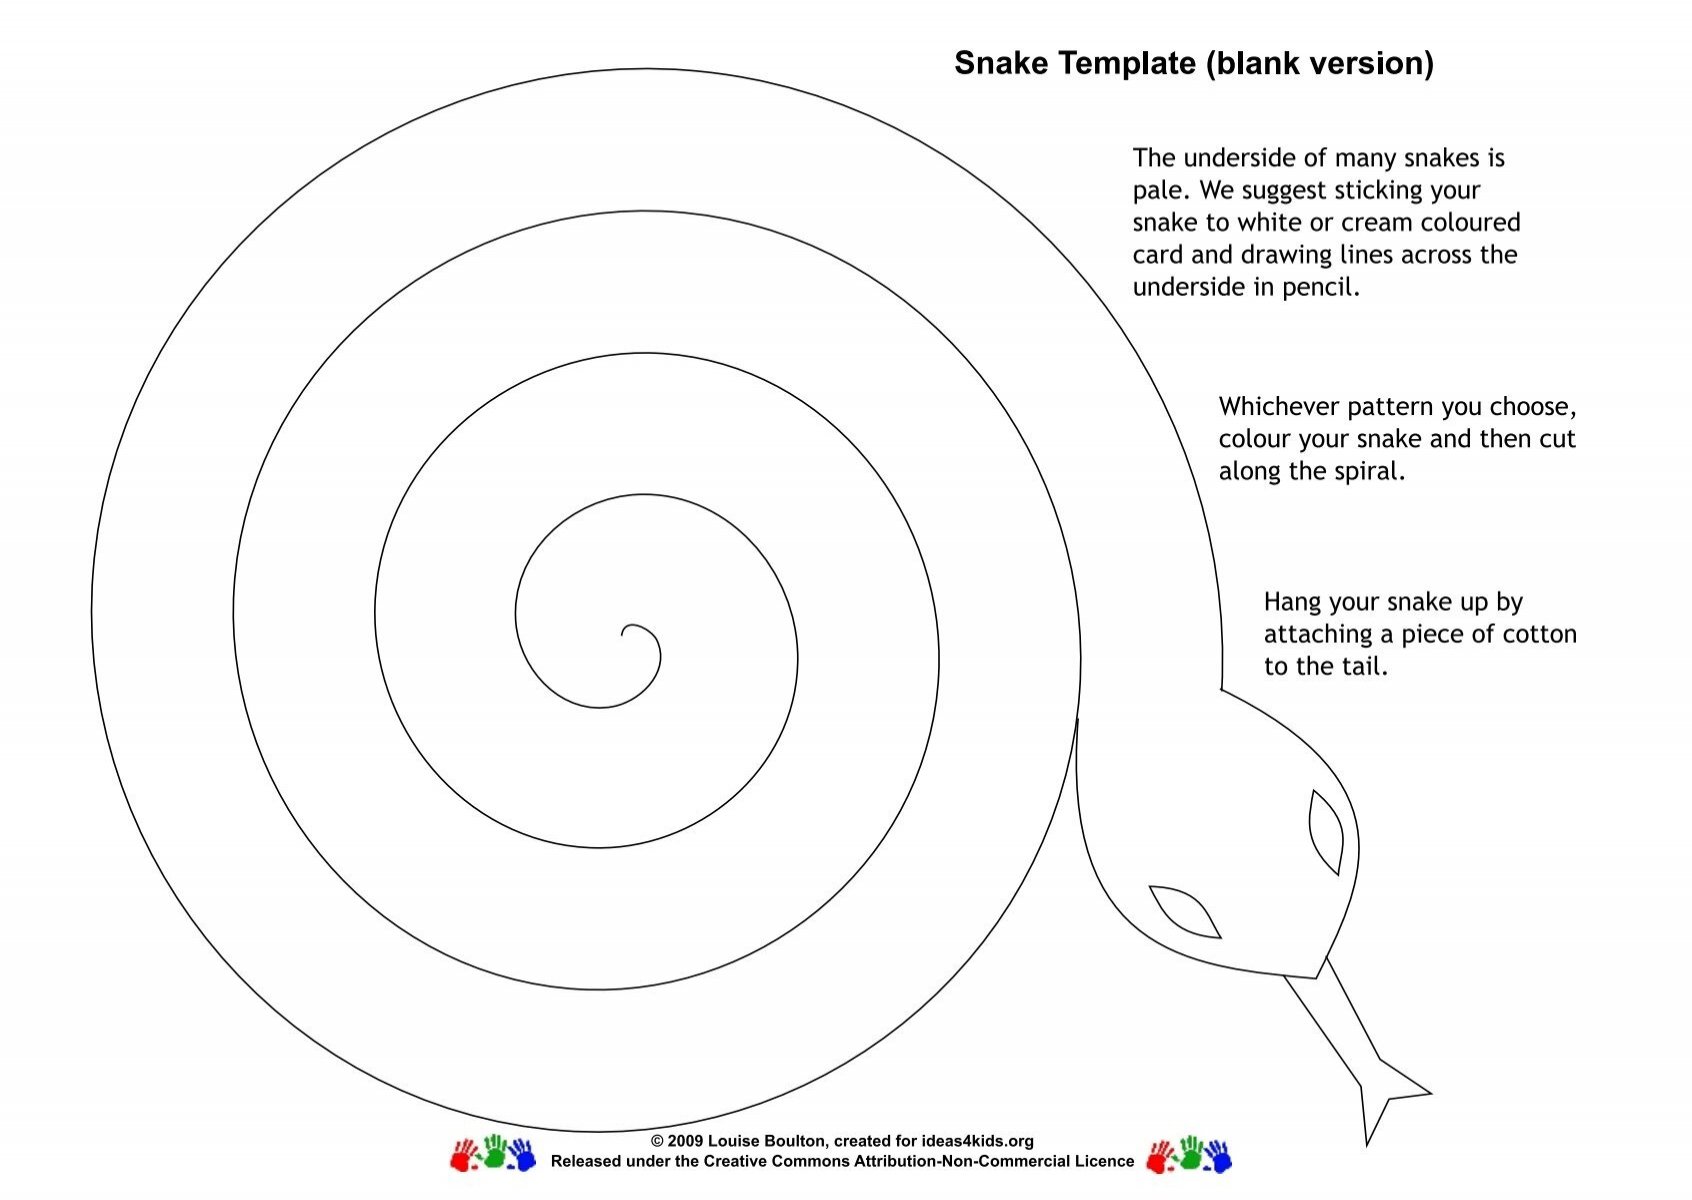 Snake Template (blank version) ideas4kids